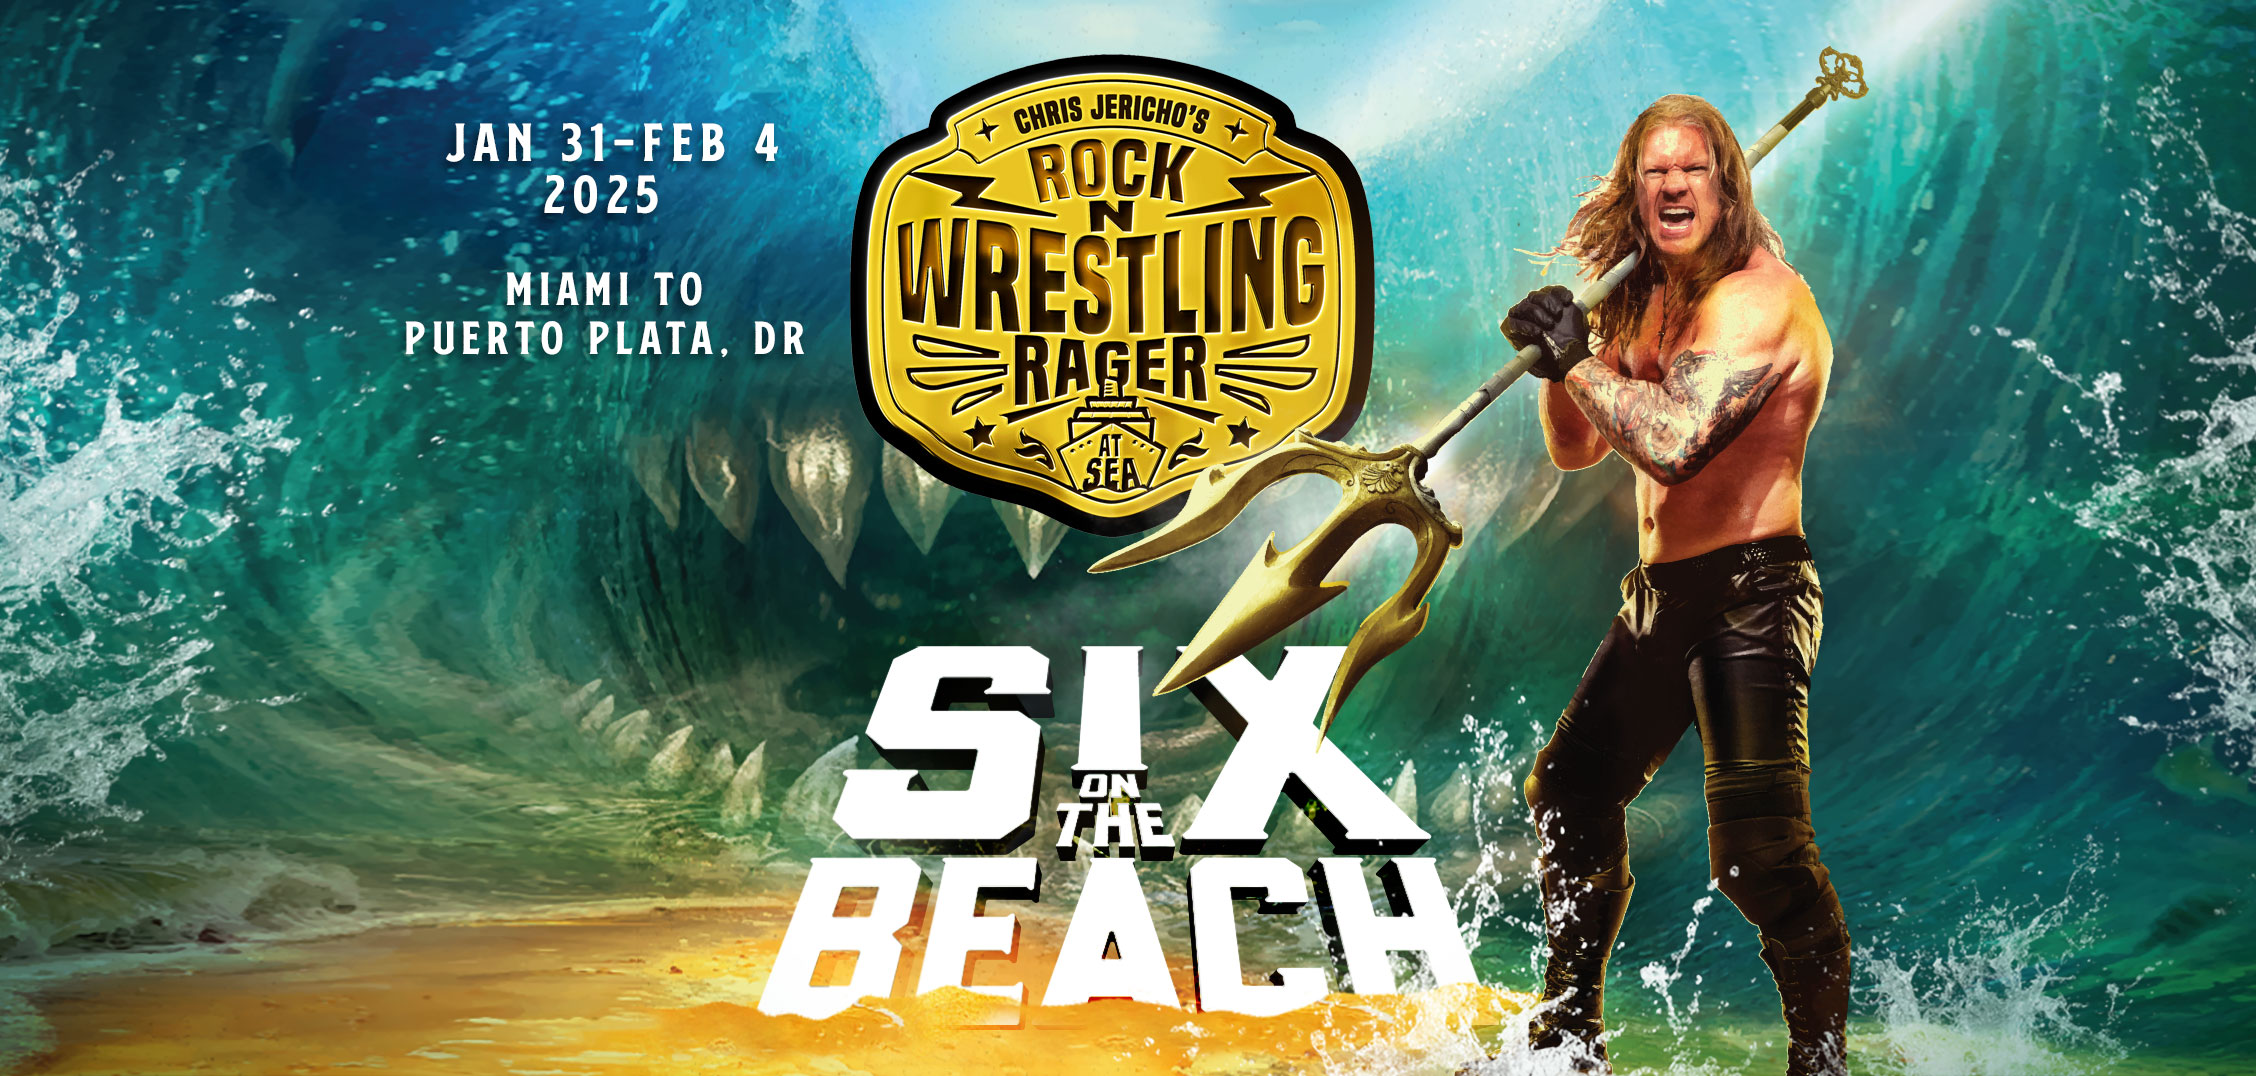 Chris Jericho's Rock 'N' Wrestling Rager at Sea